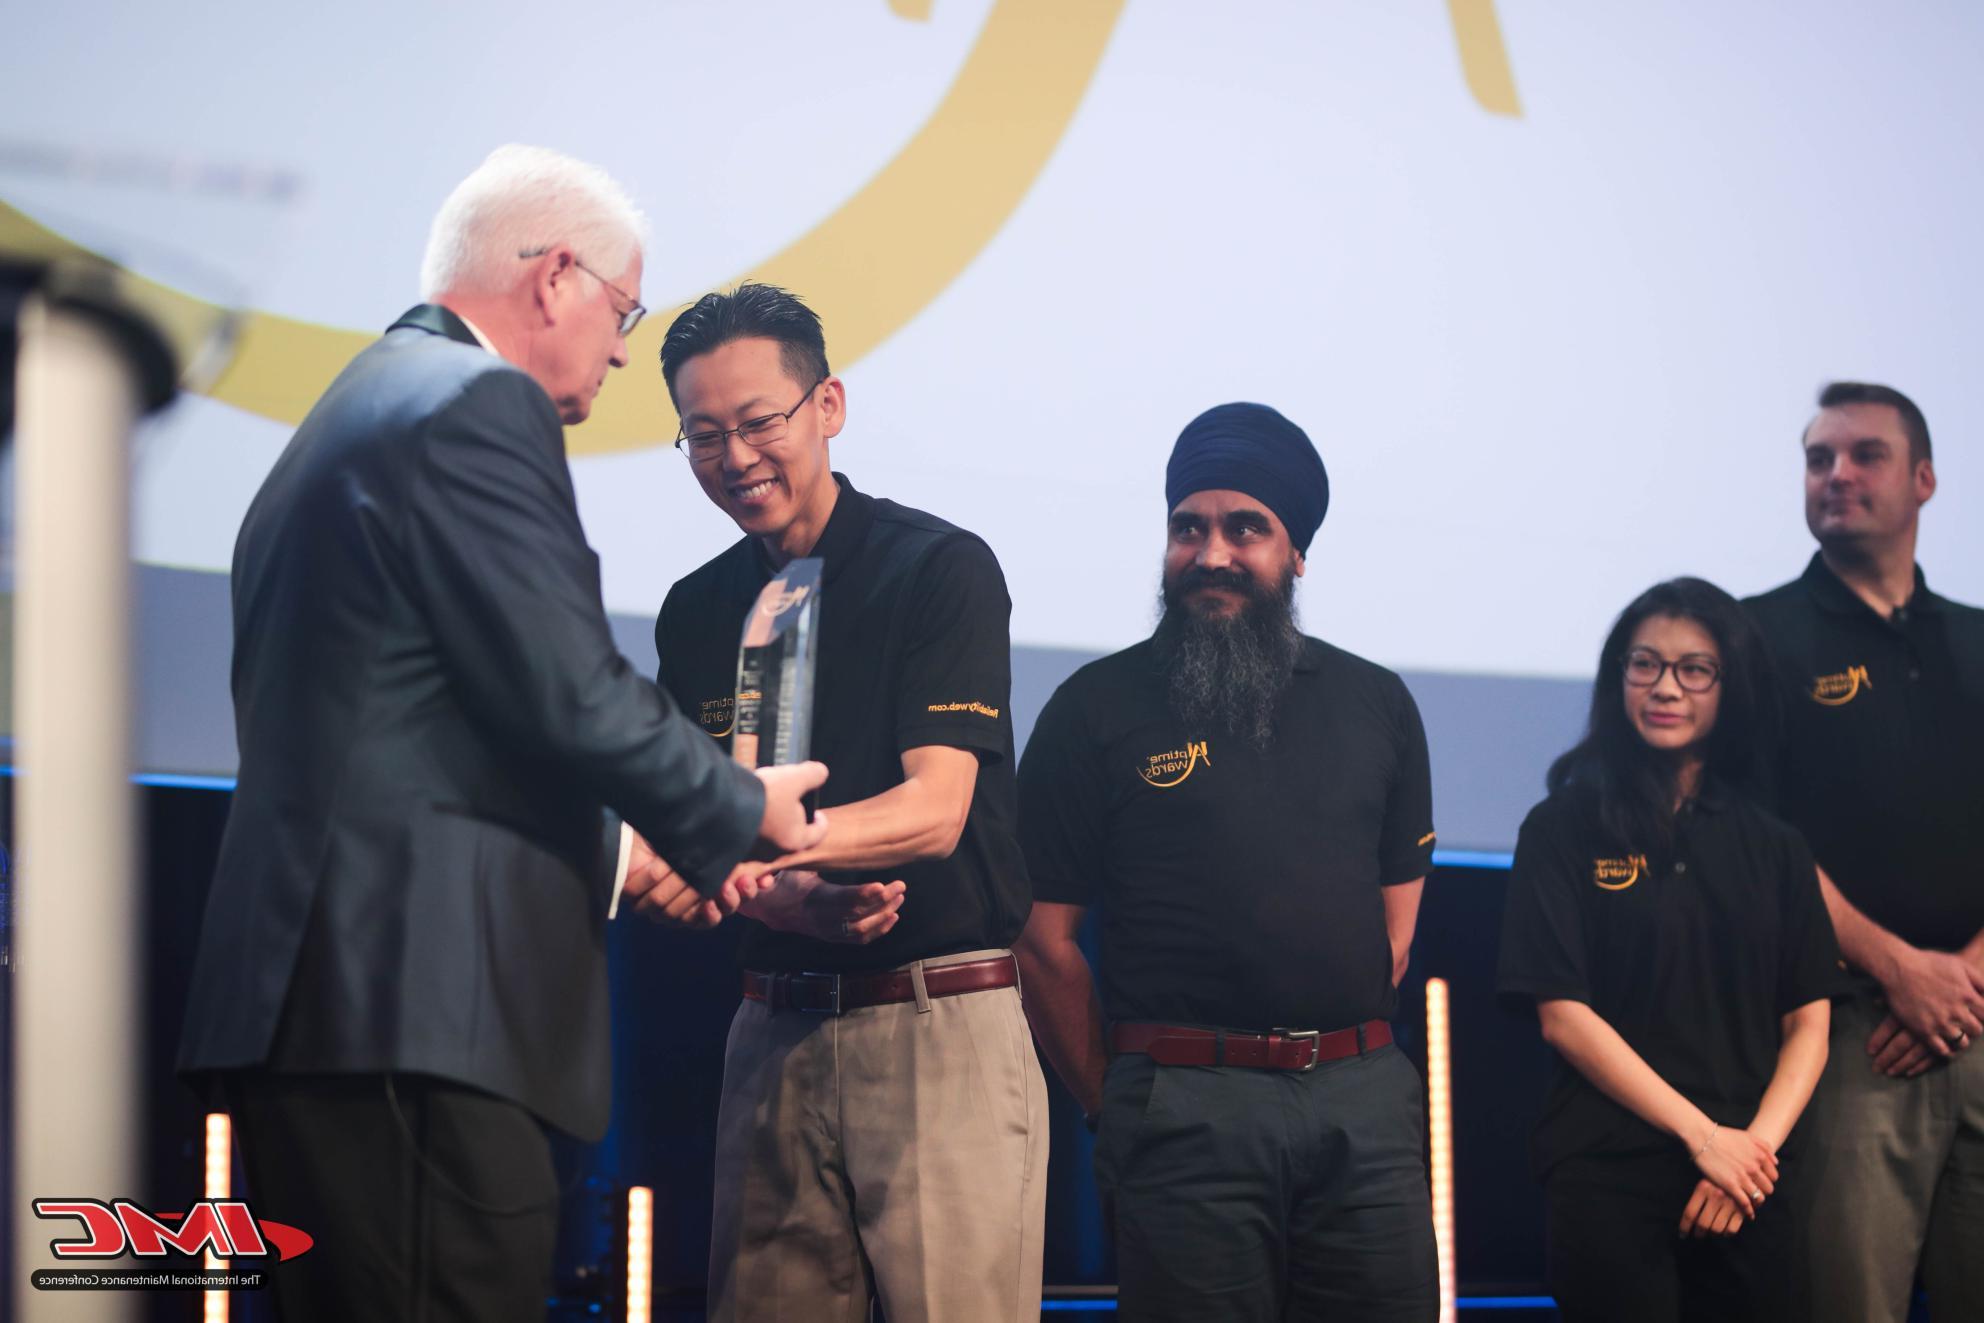 Andy Yang and team accepting Uptime award